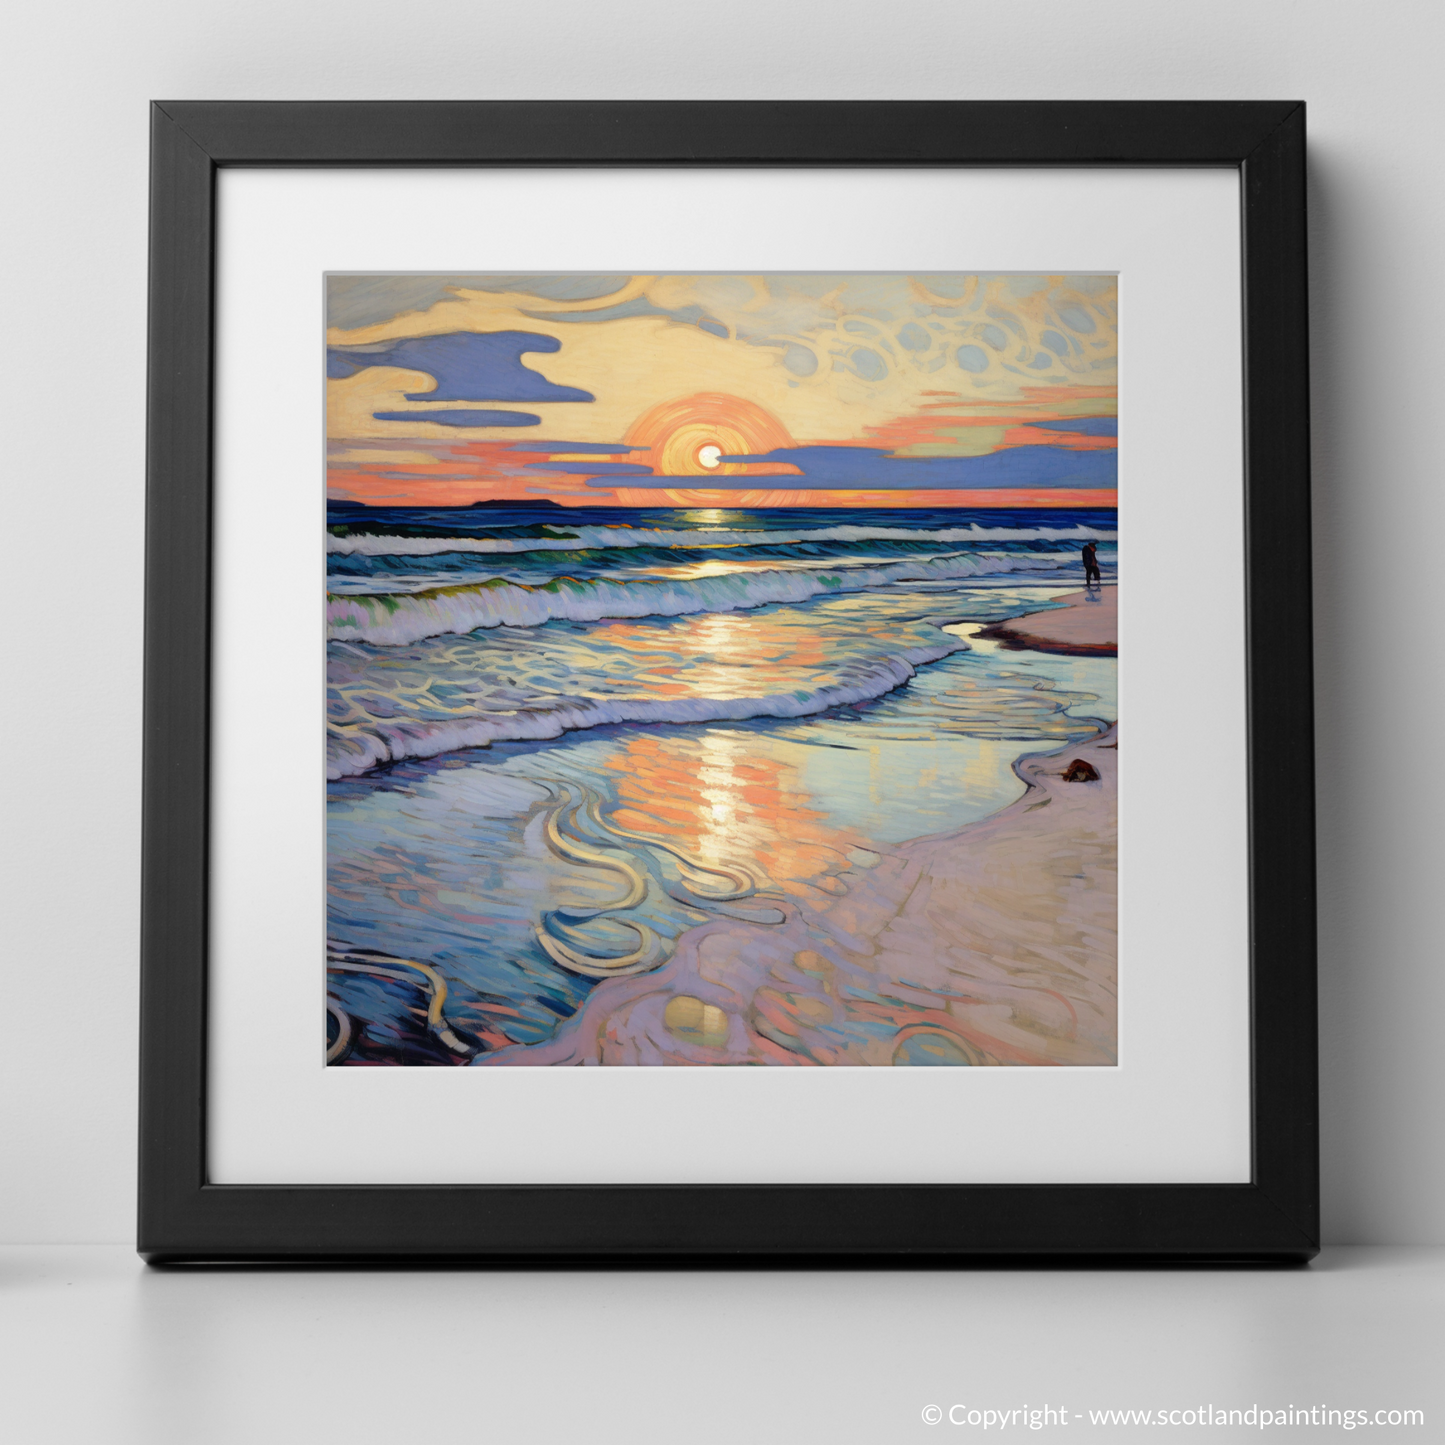 Sunset Embrace at Nairn Beach